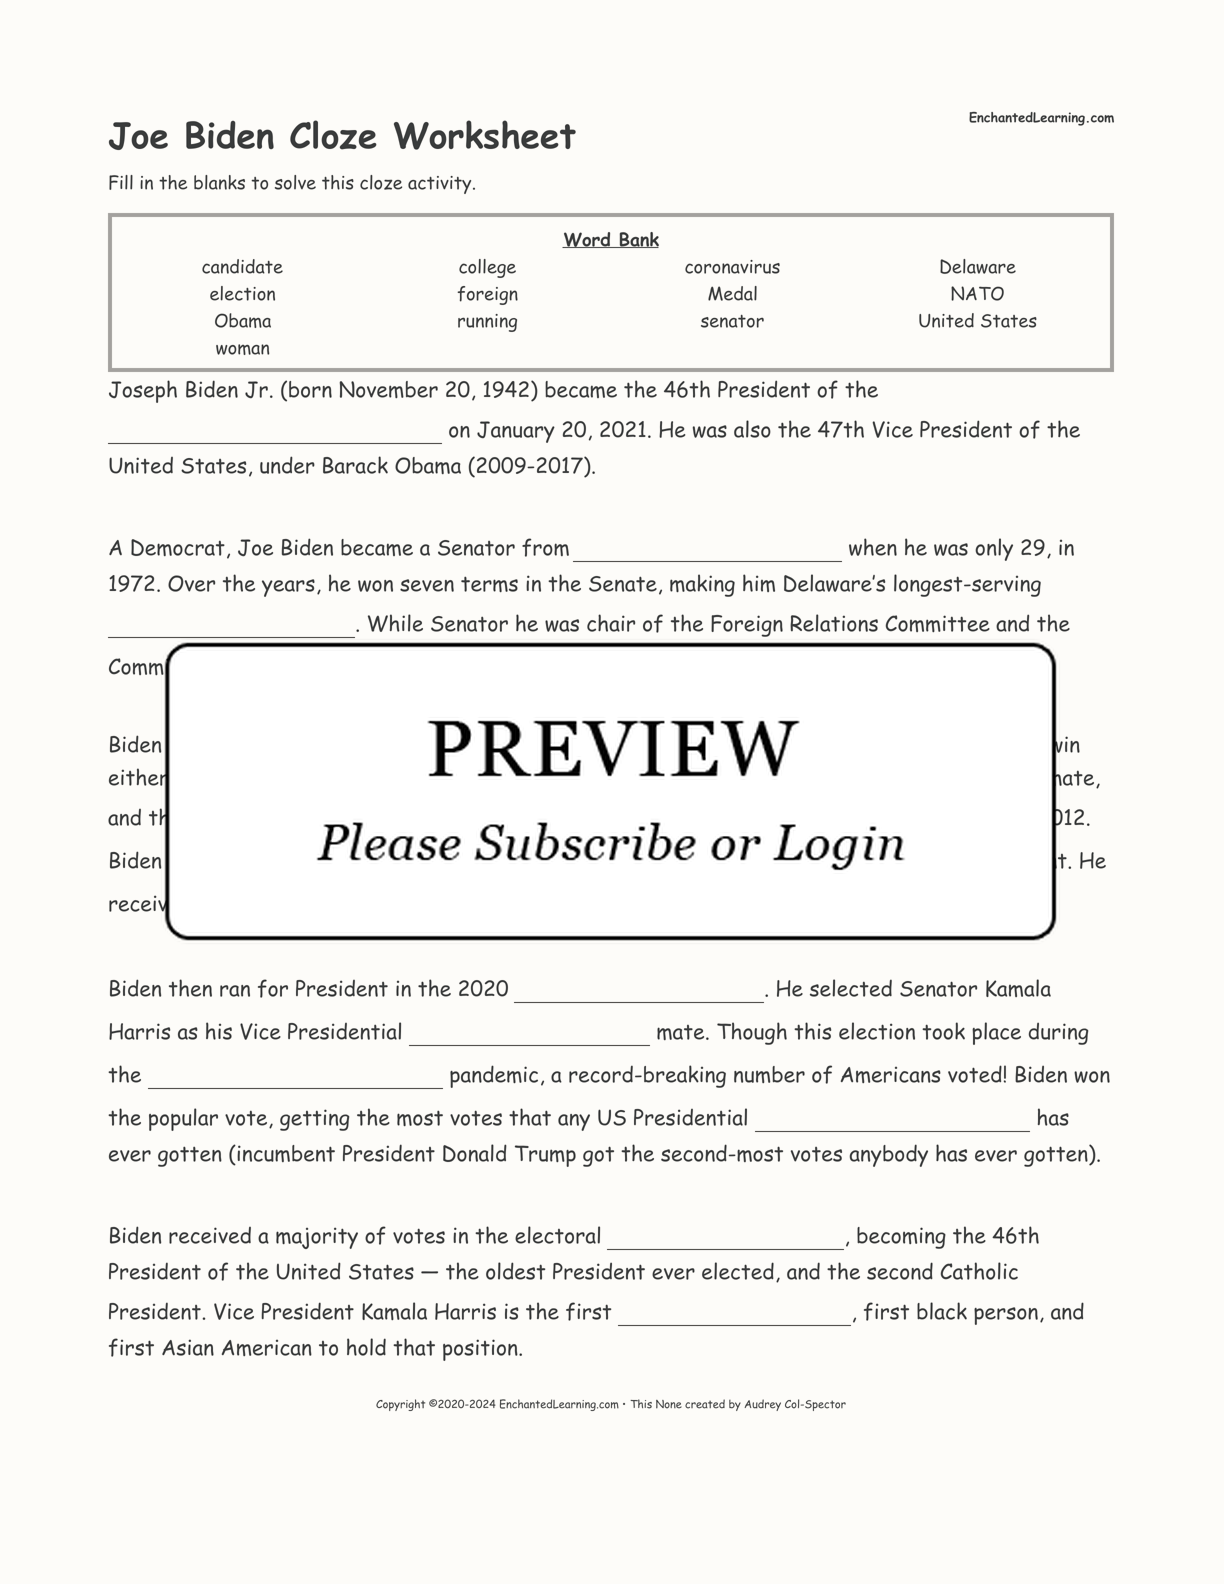 Joe Biden Cloze Worksheet interactive worksheet page 1